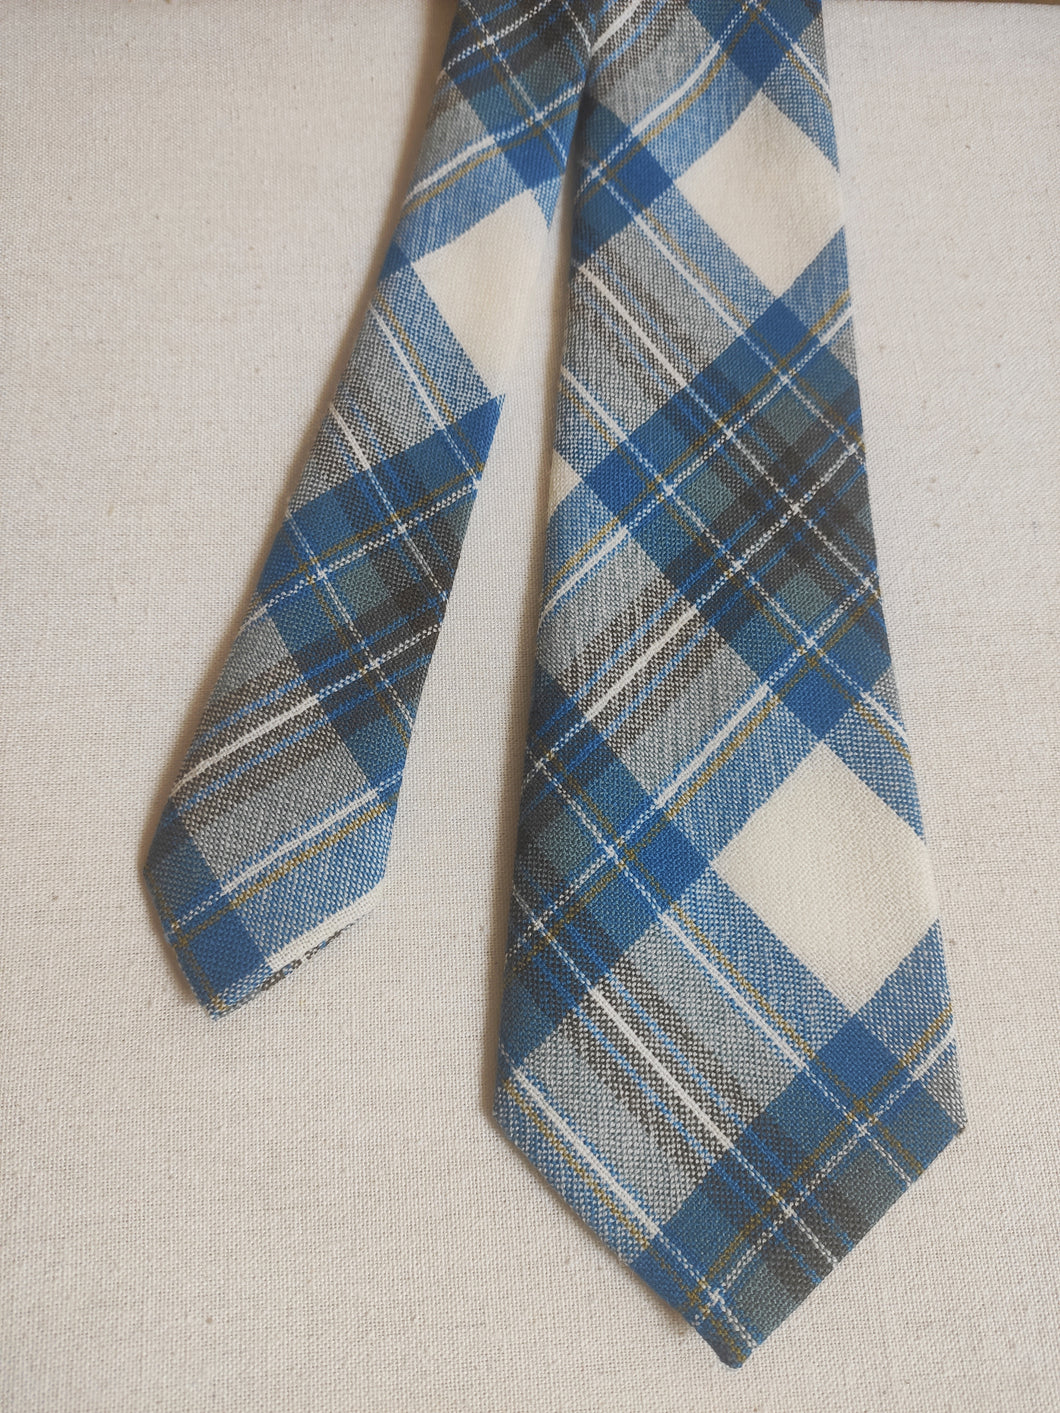 Cravate vintage tartan en pure laine Made in Scotland